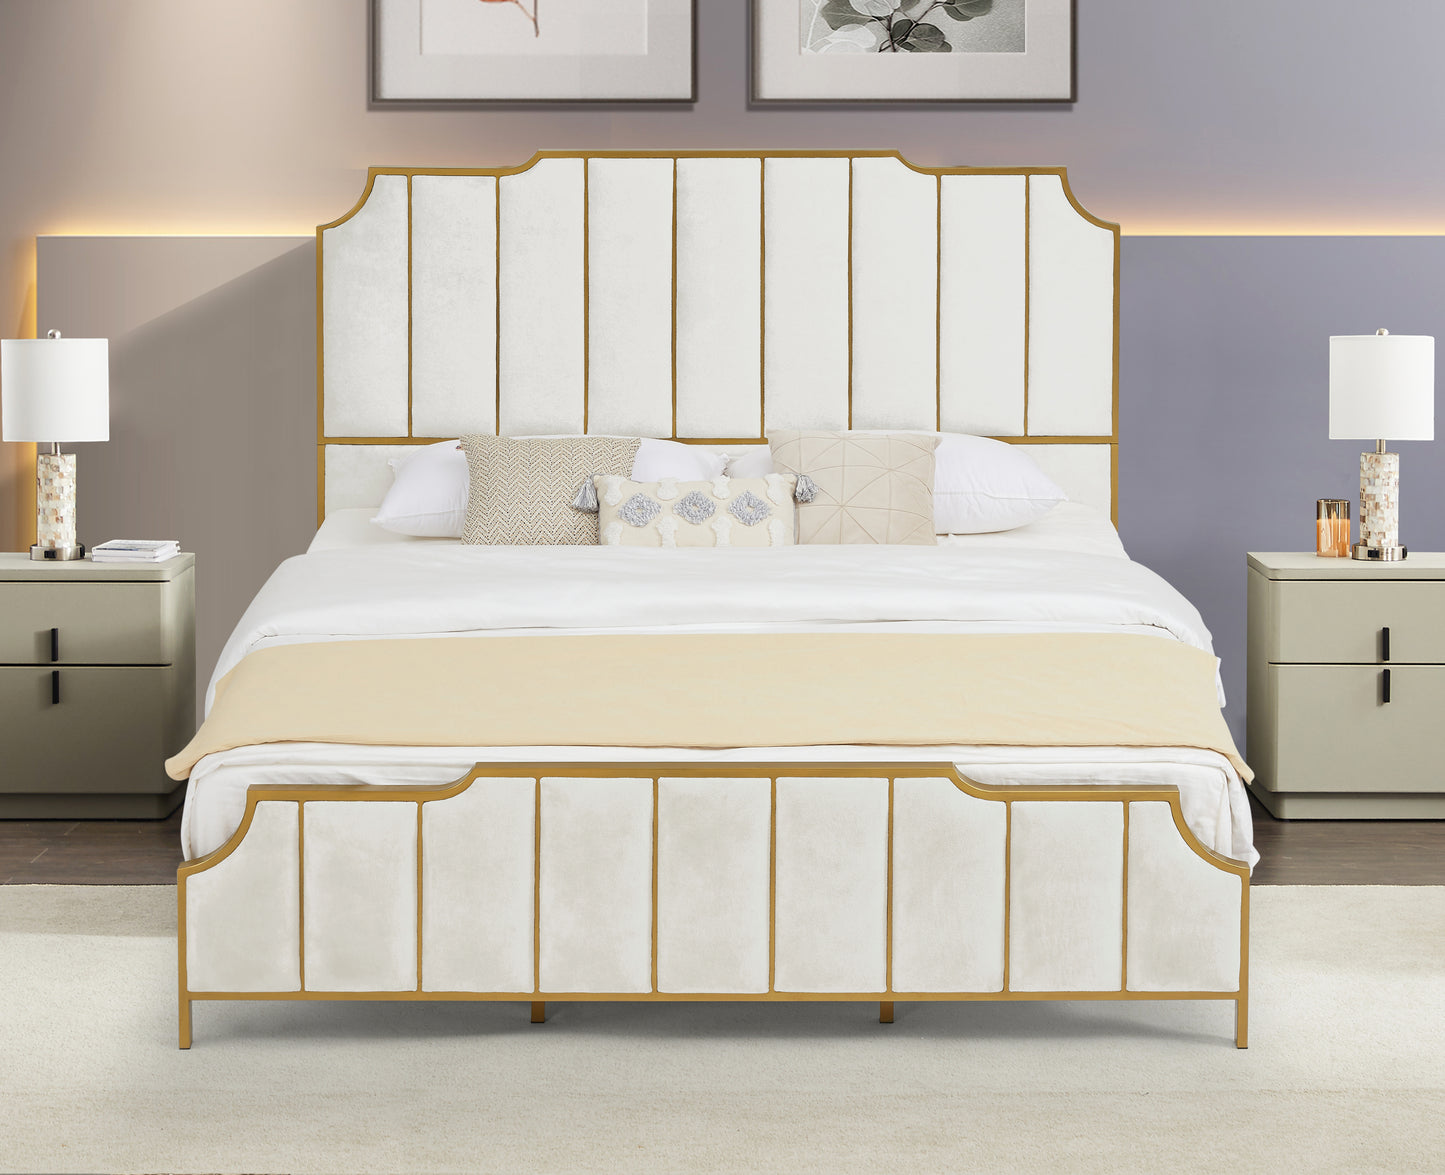 King Size Bed Frame,Upholstered Platform Bed & High headboard with Wood Slat Support,No Box Spring Needed,Easy Assembly, Velvet White